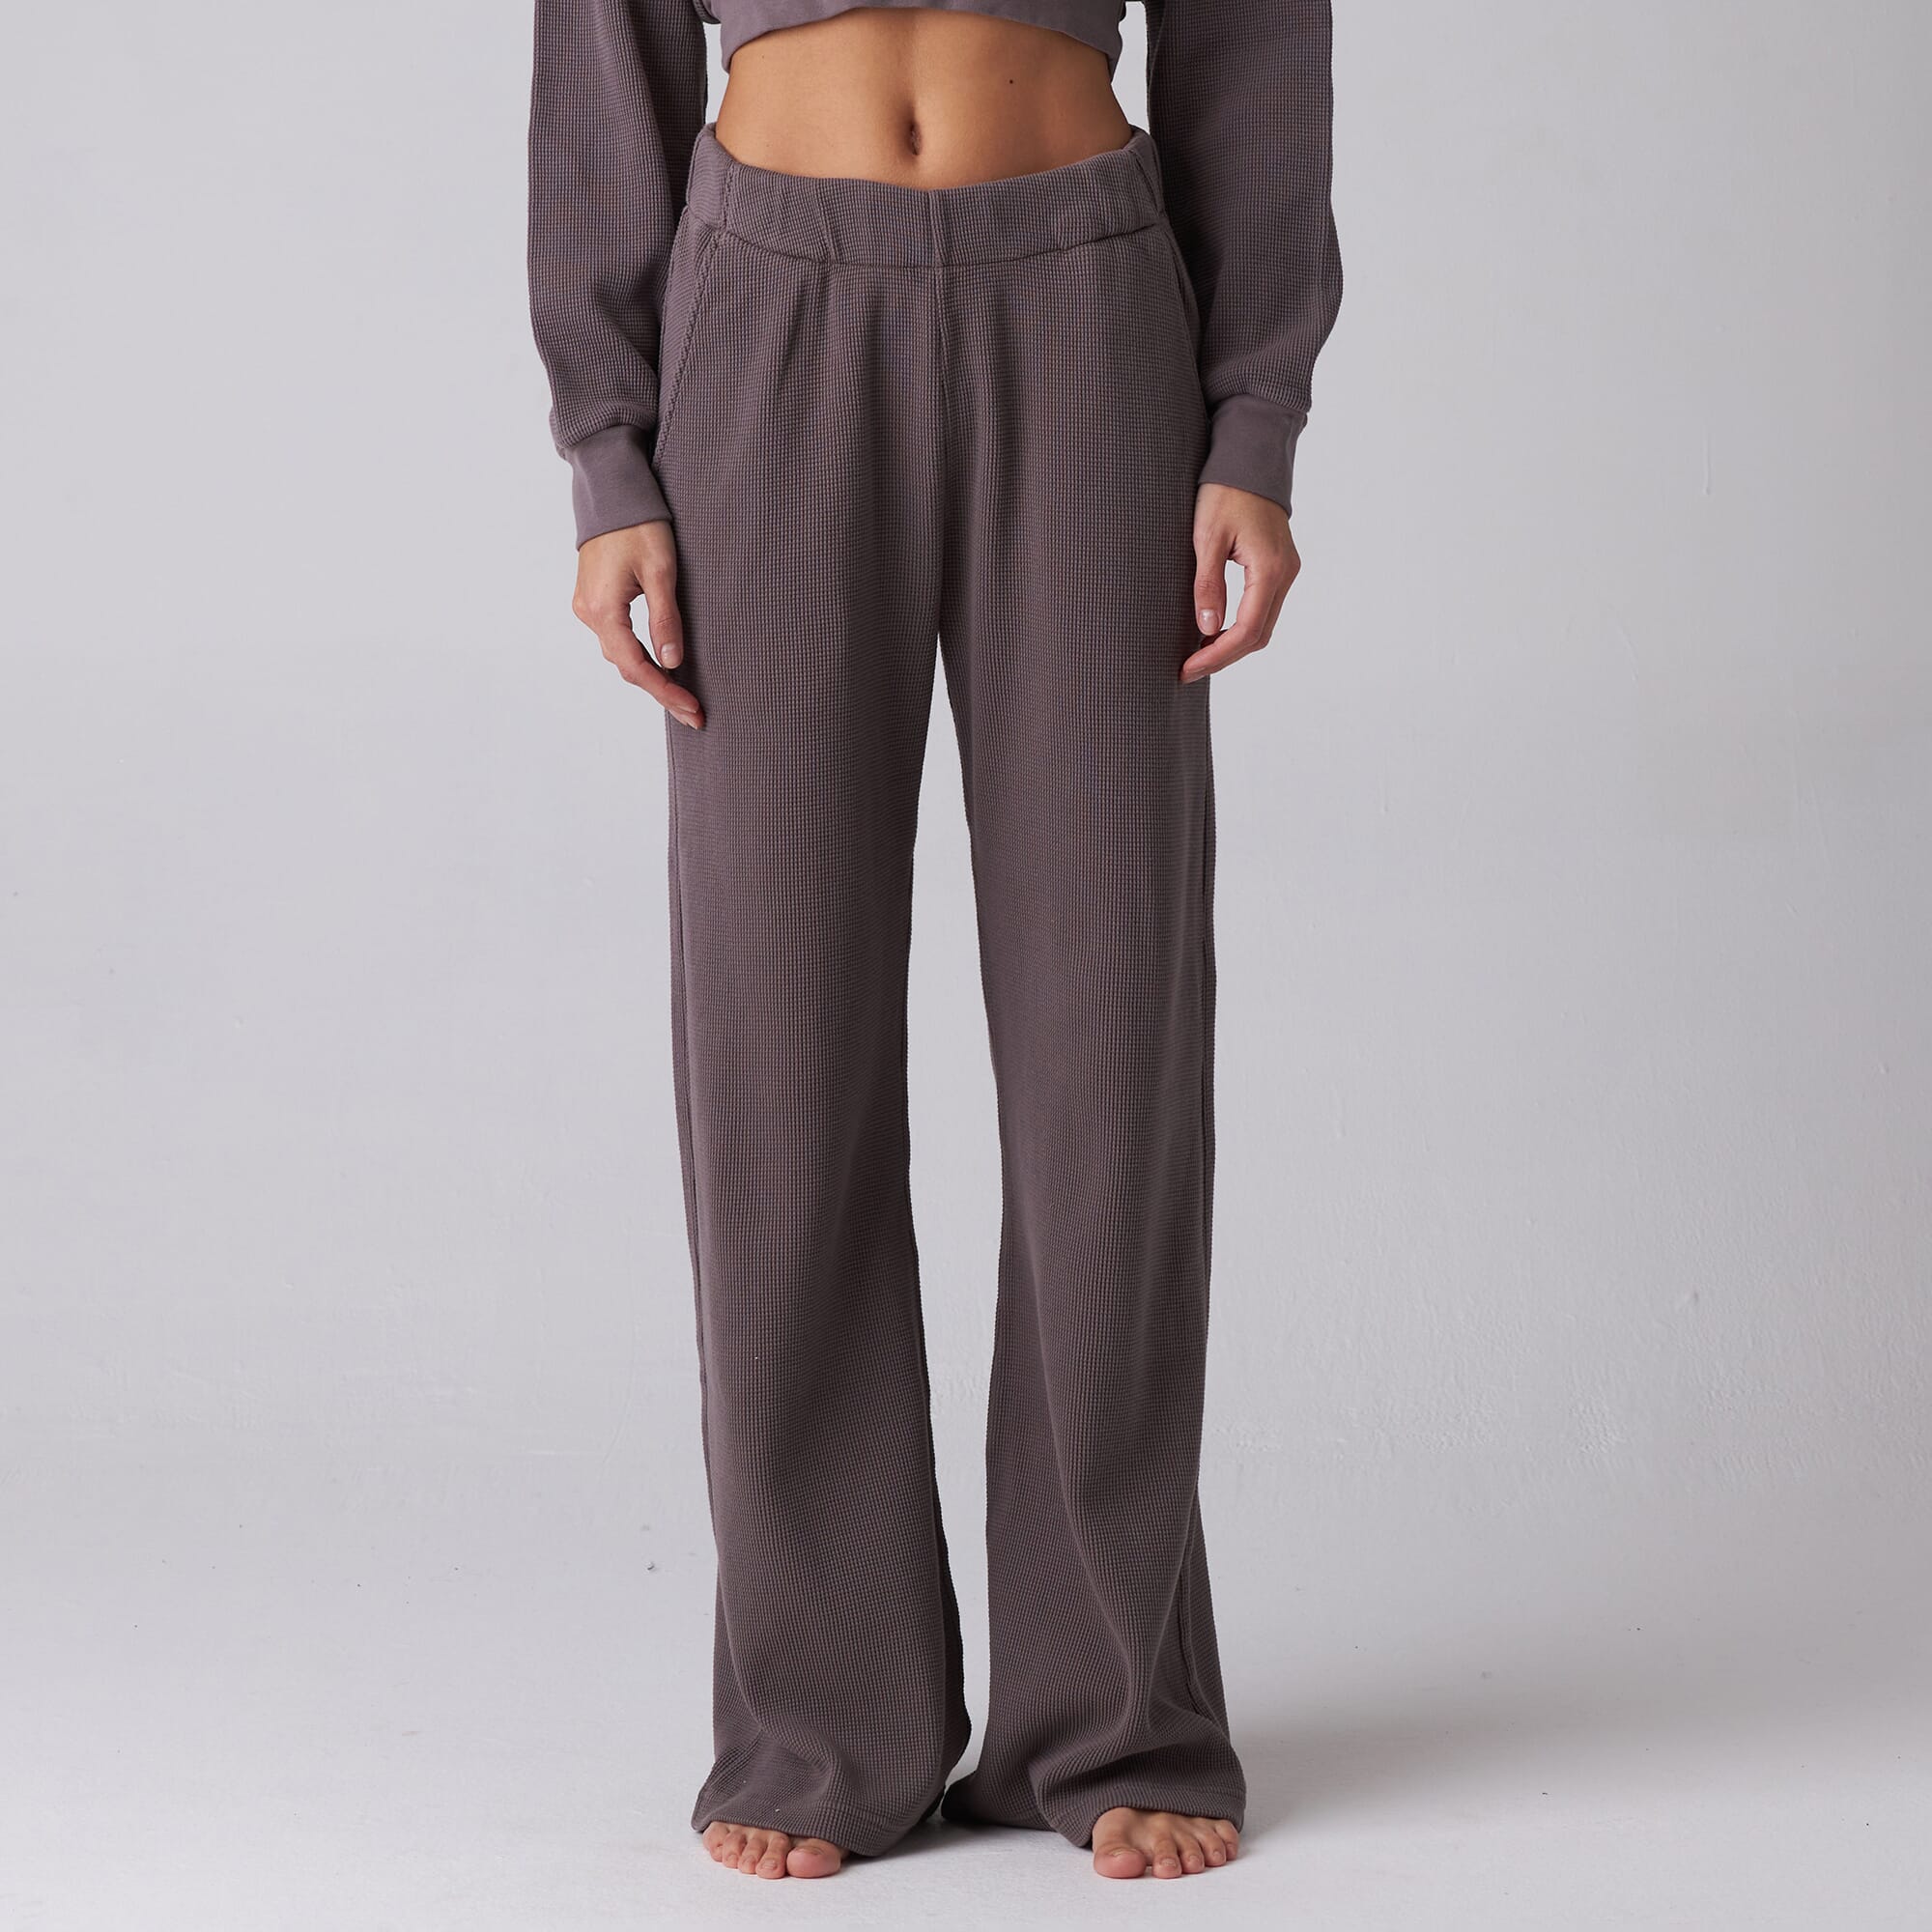 Realtree Sweatpants Adult Large Gray Drawstring Waffle Knit Pants Womens L